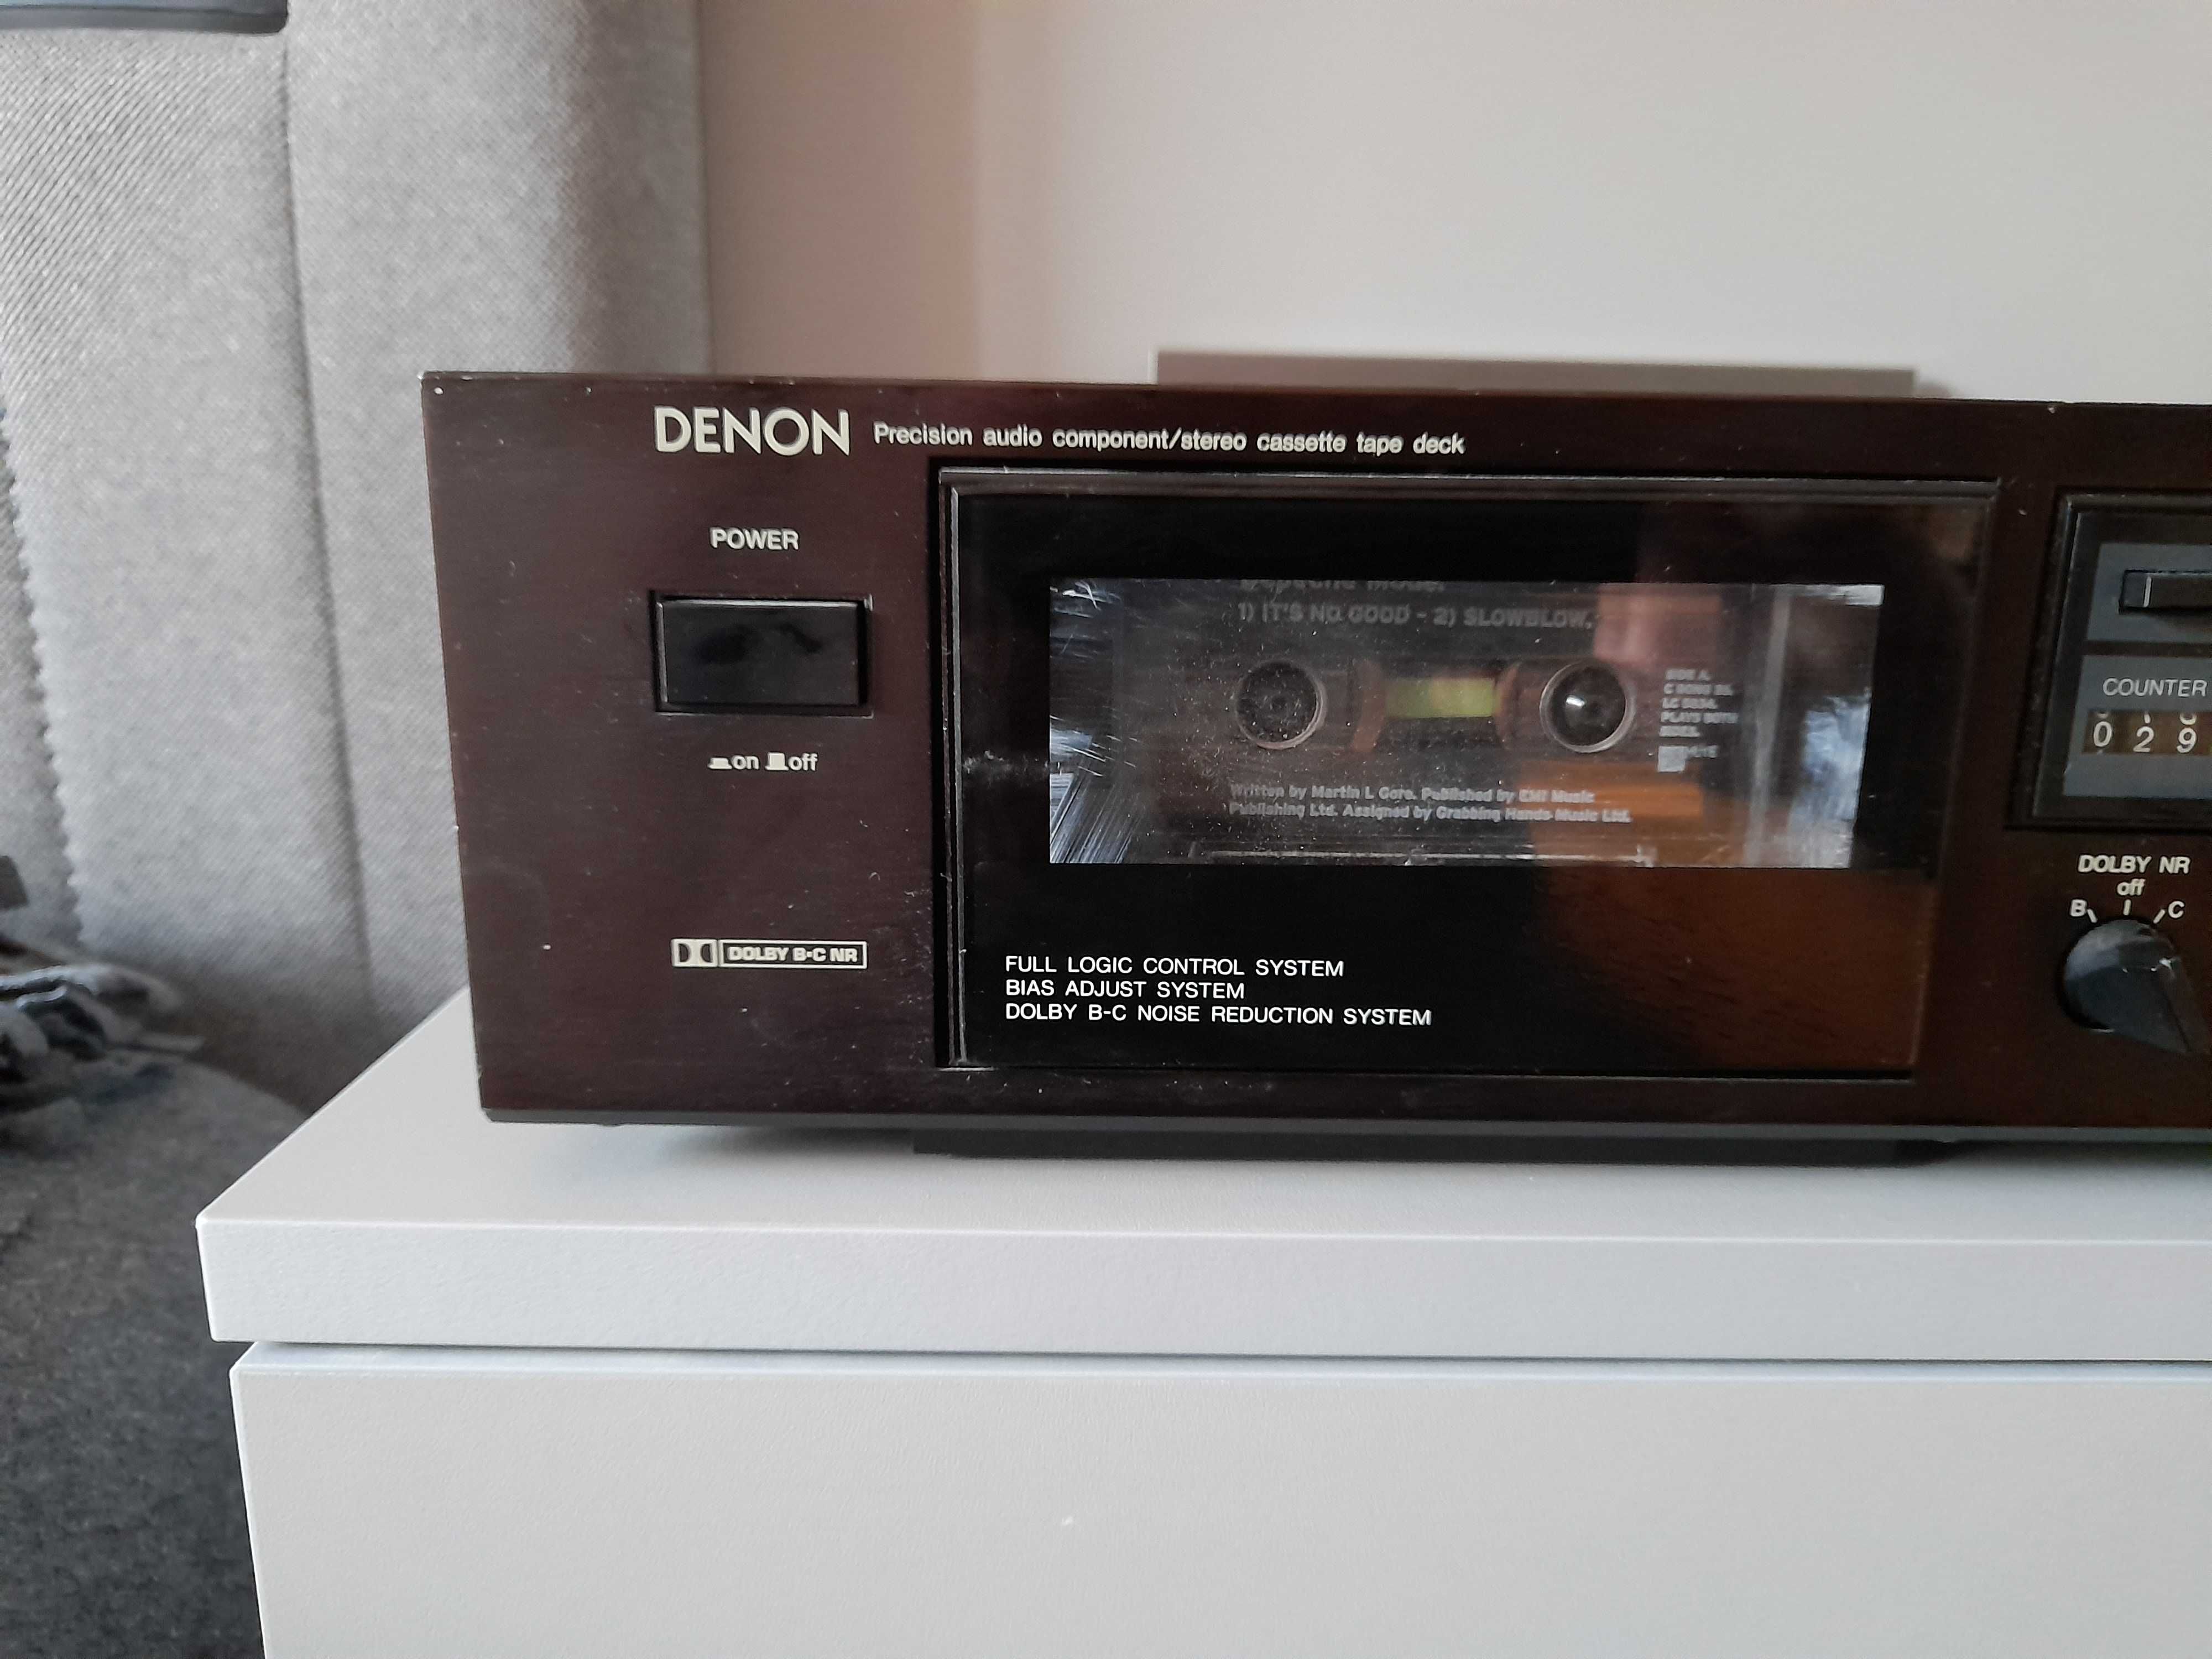 Magnetofon Denon DR M07 Japan